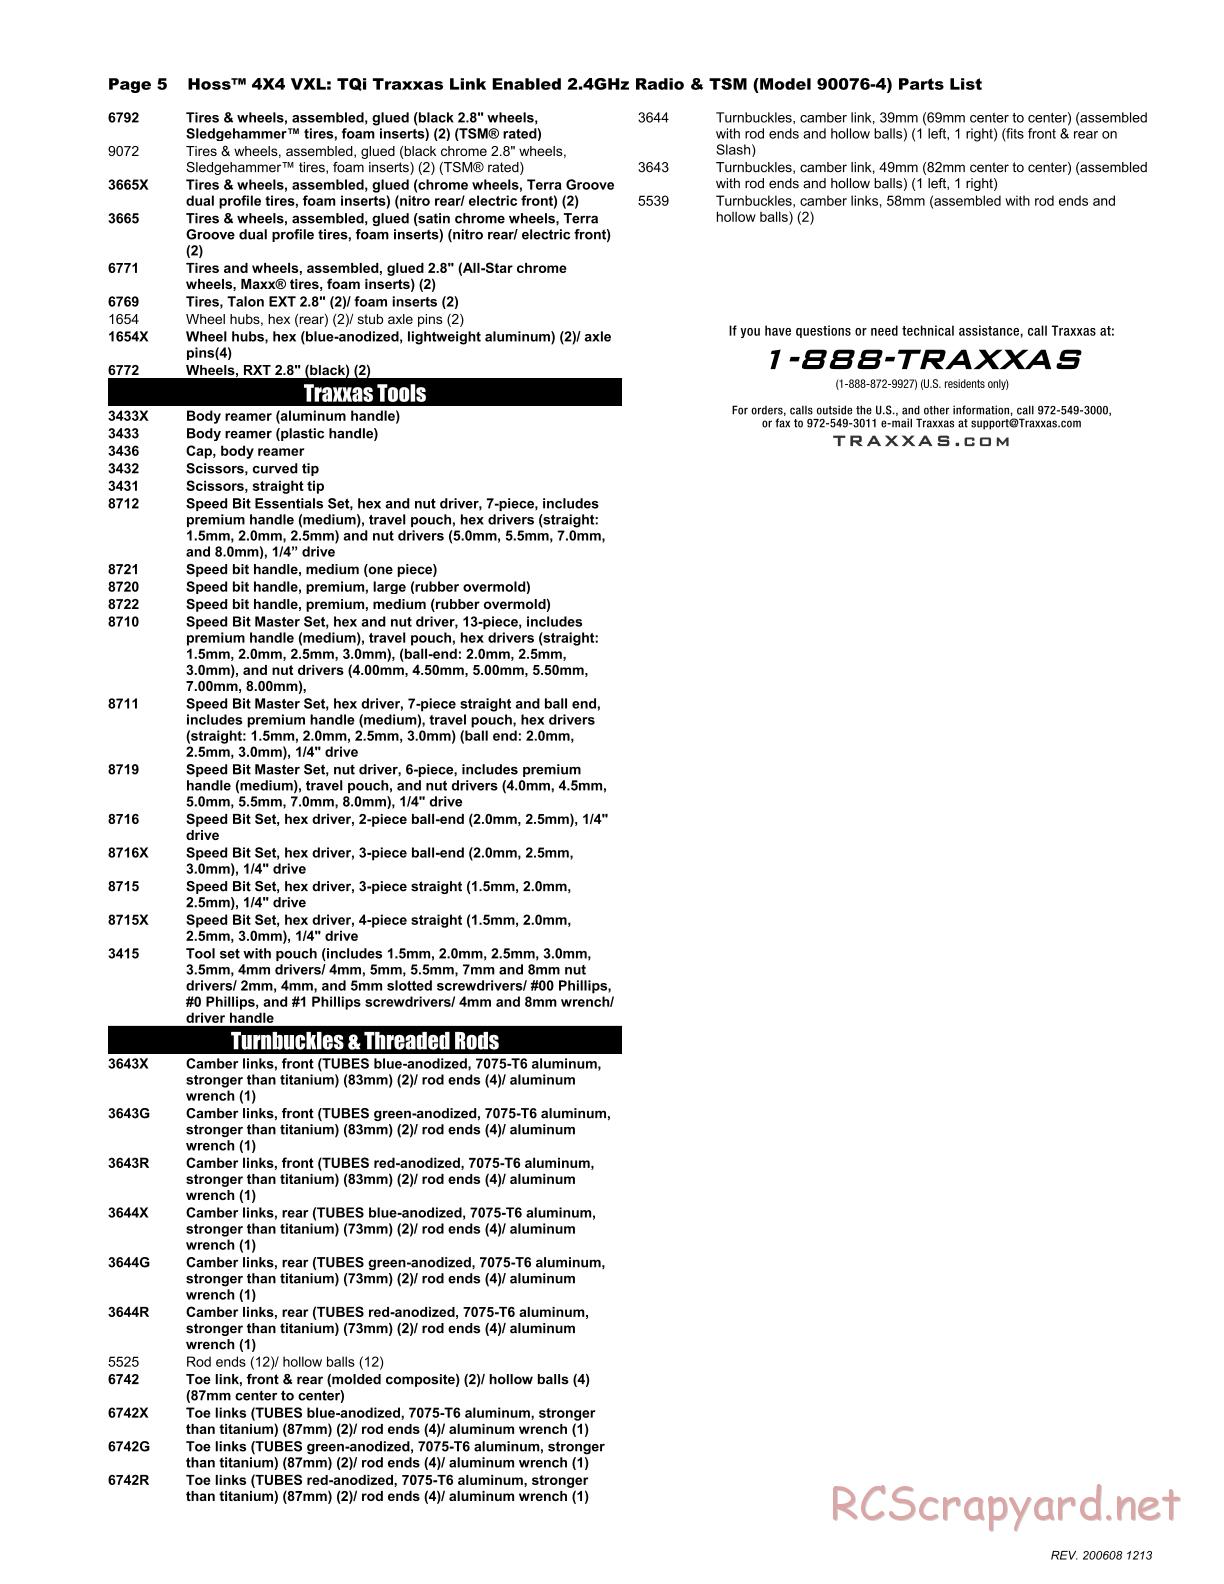 Traxxas - Hoss 4x4 VXL (2020) - Parts List - Page 5